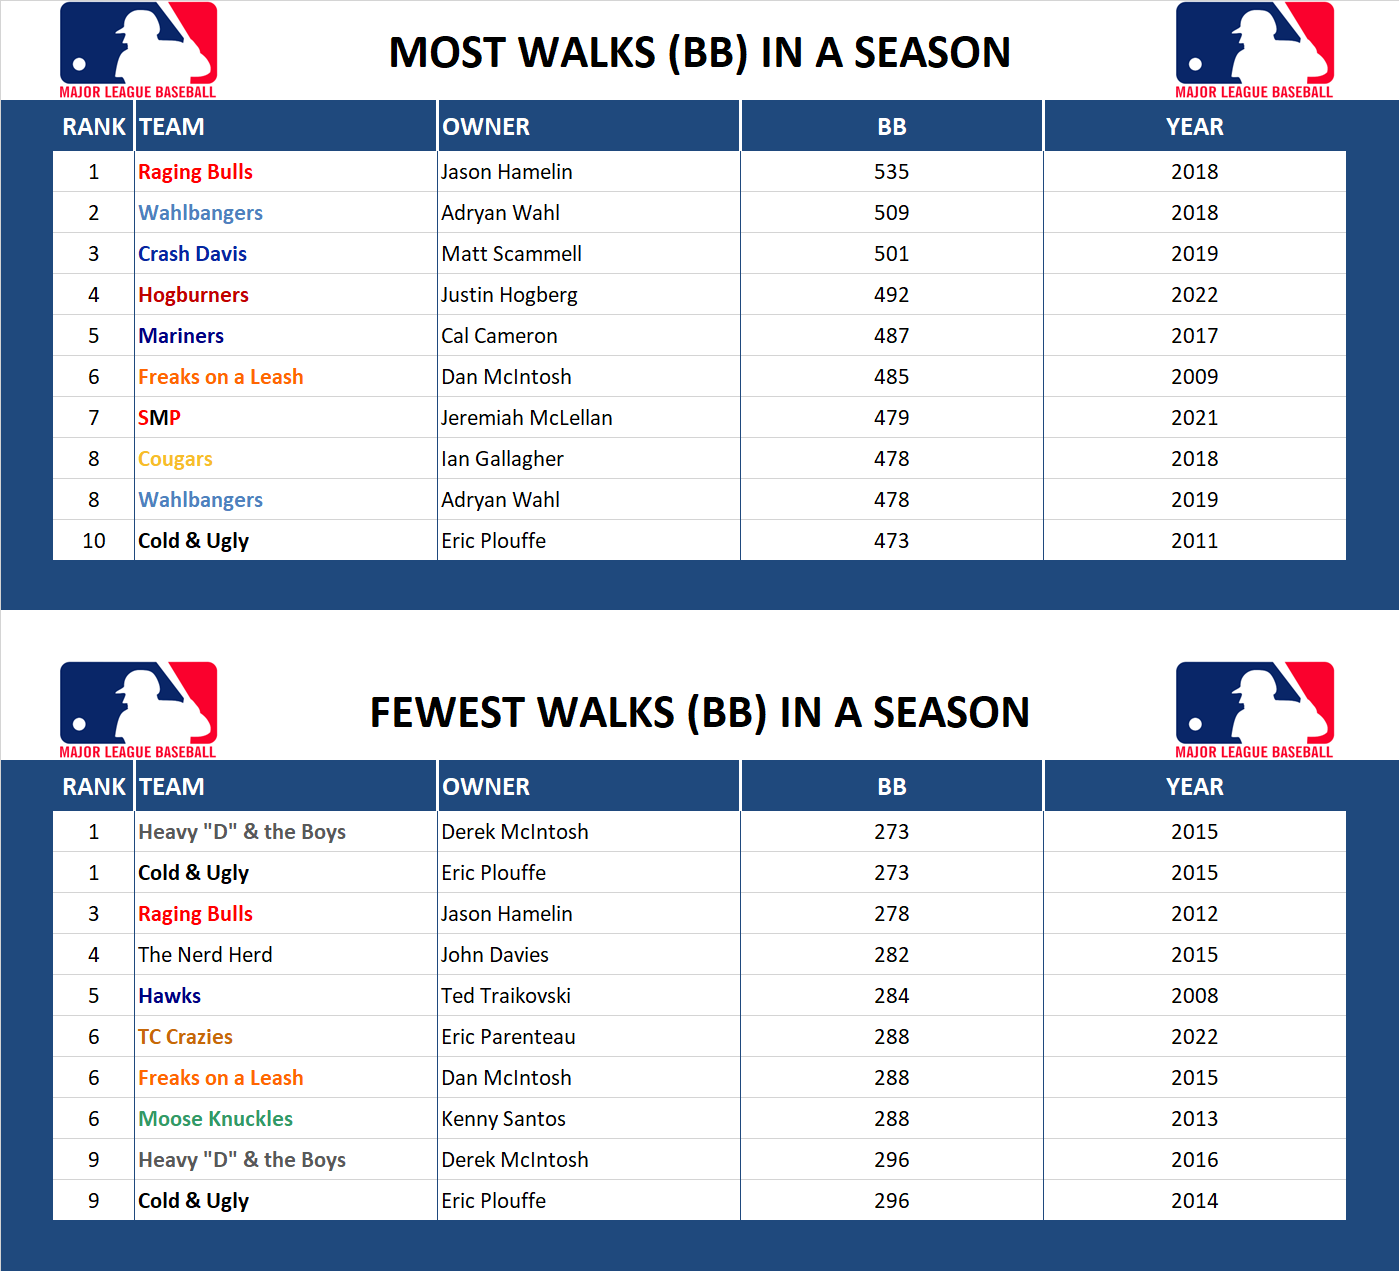 Major league Baseball Record Walks (BB)